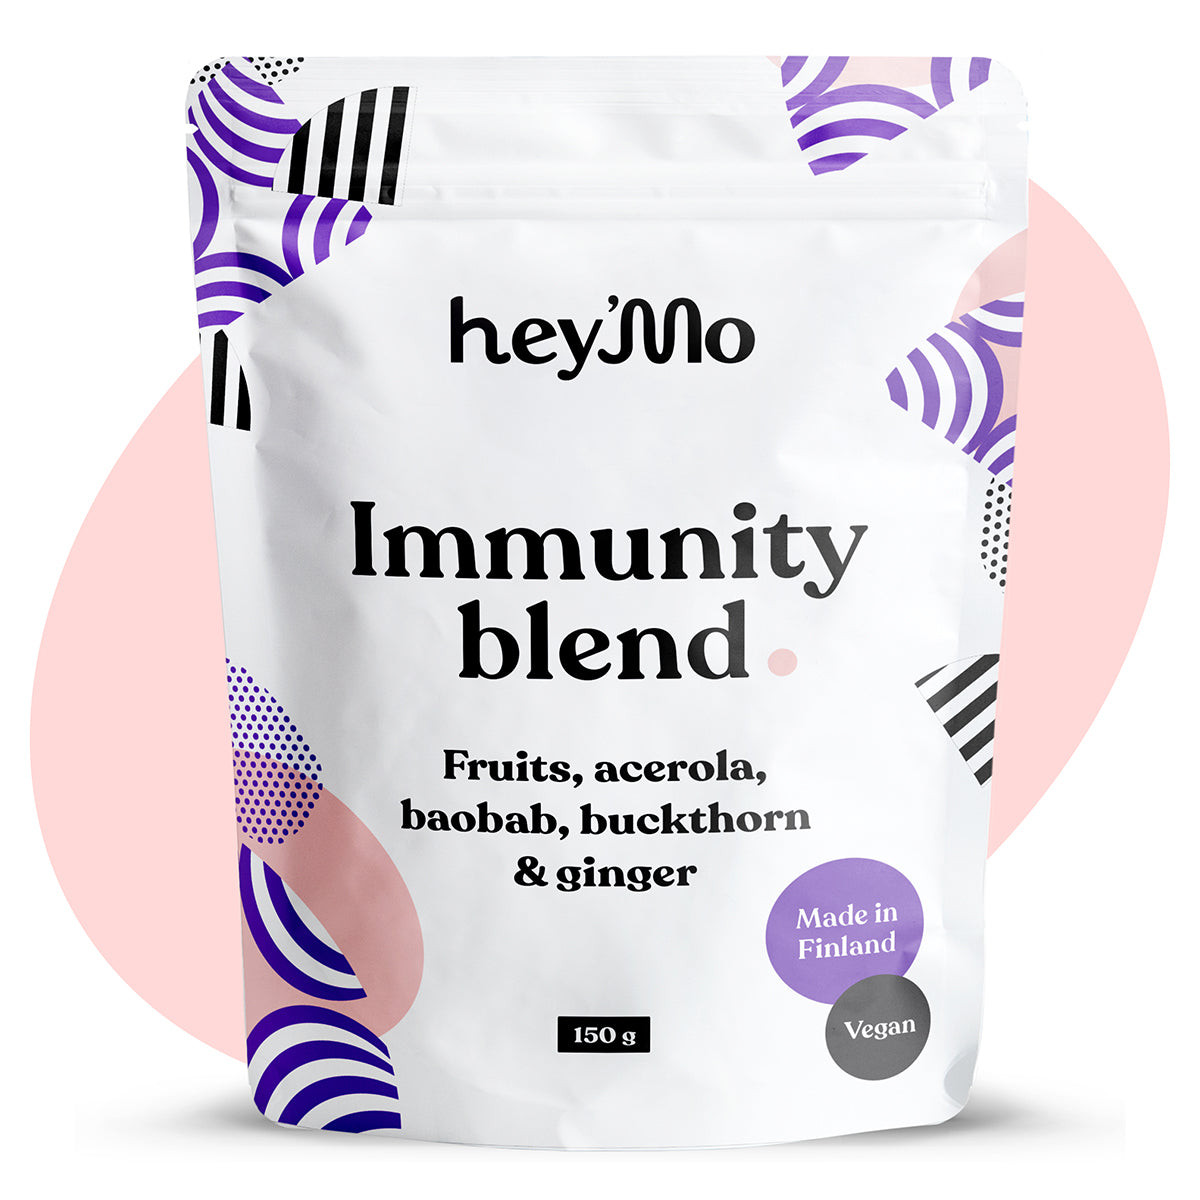 Immunity blend